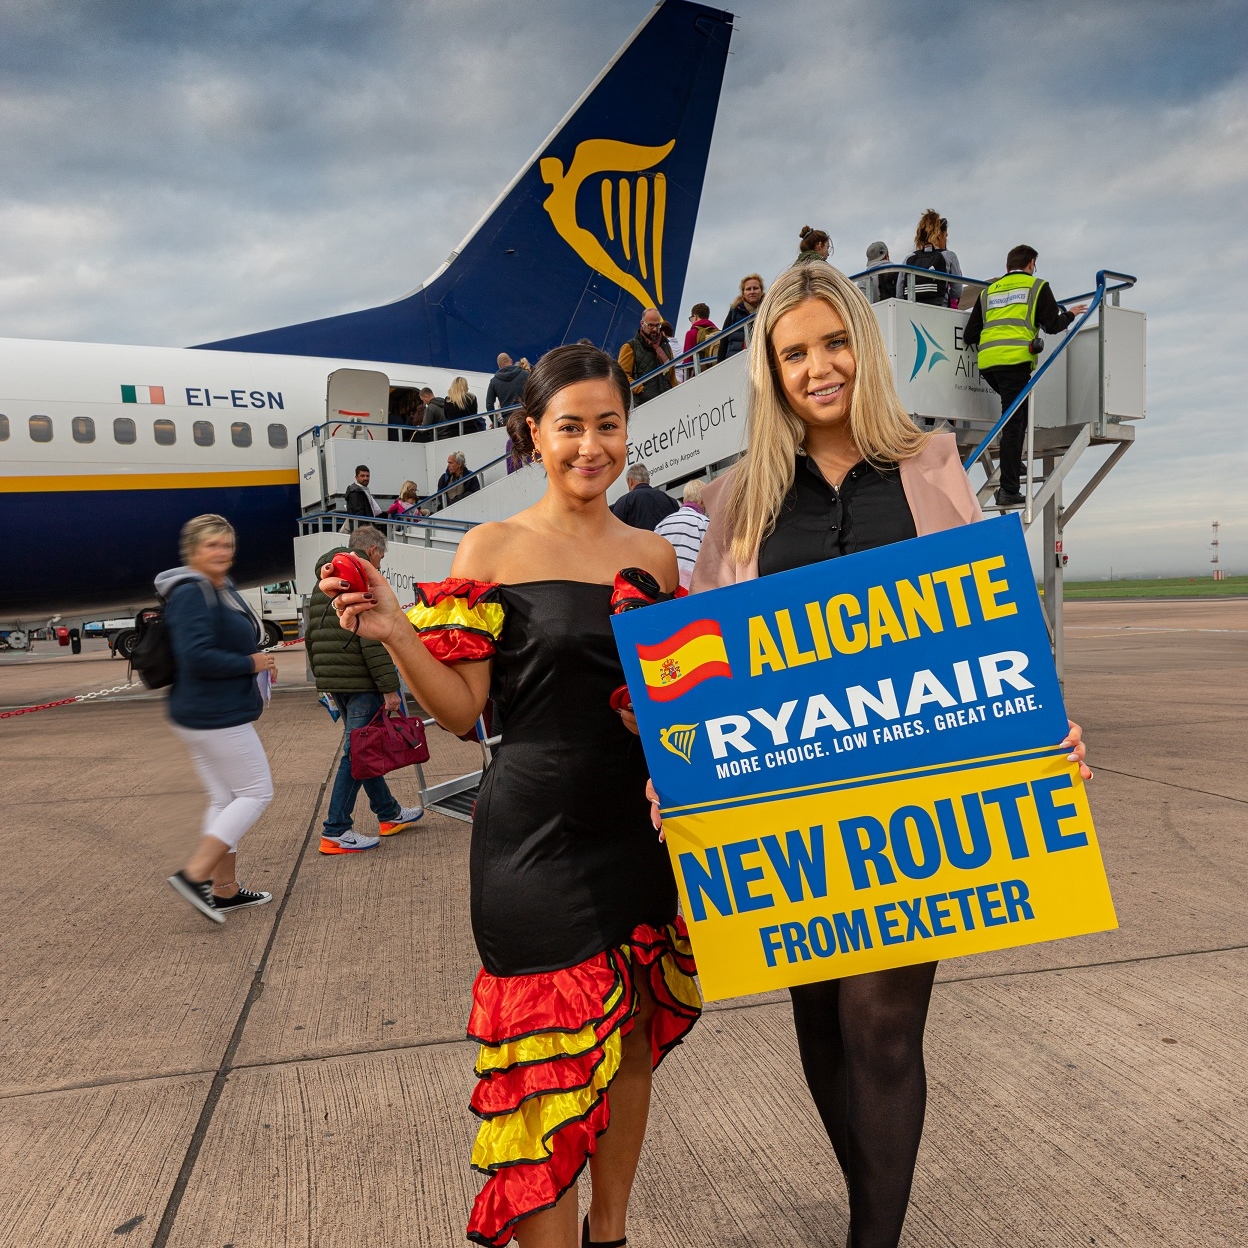 Ryanair flights to Alicante start from 